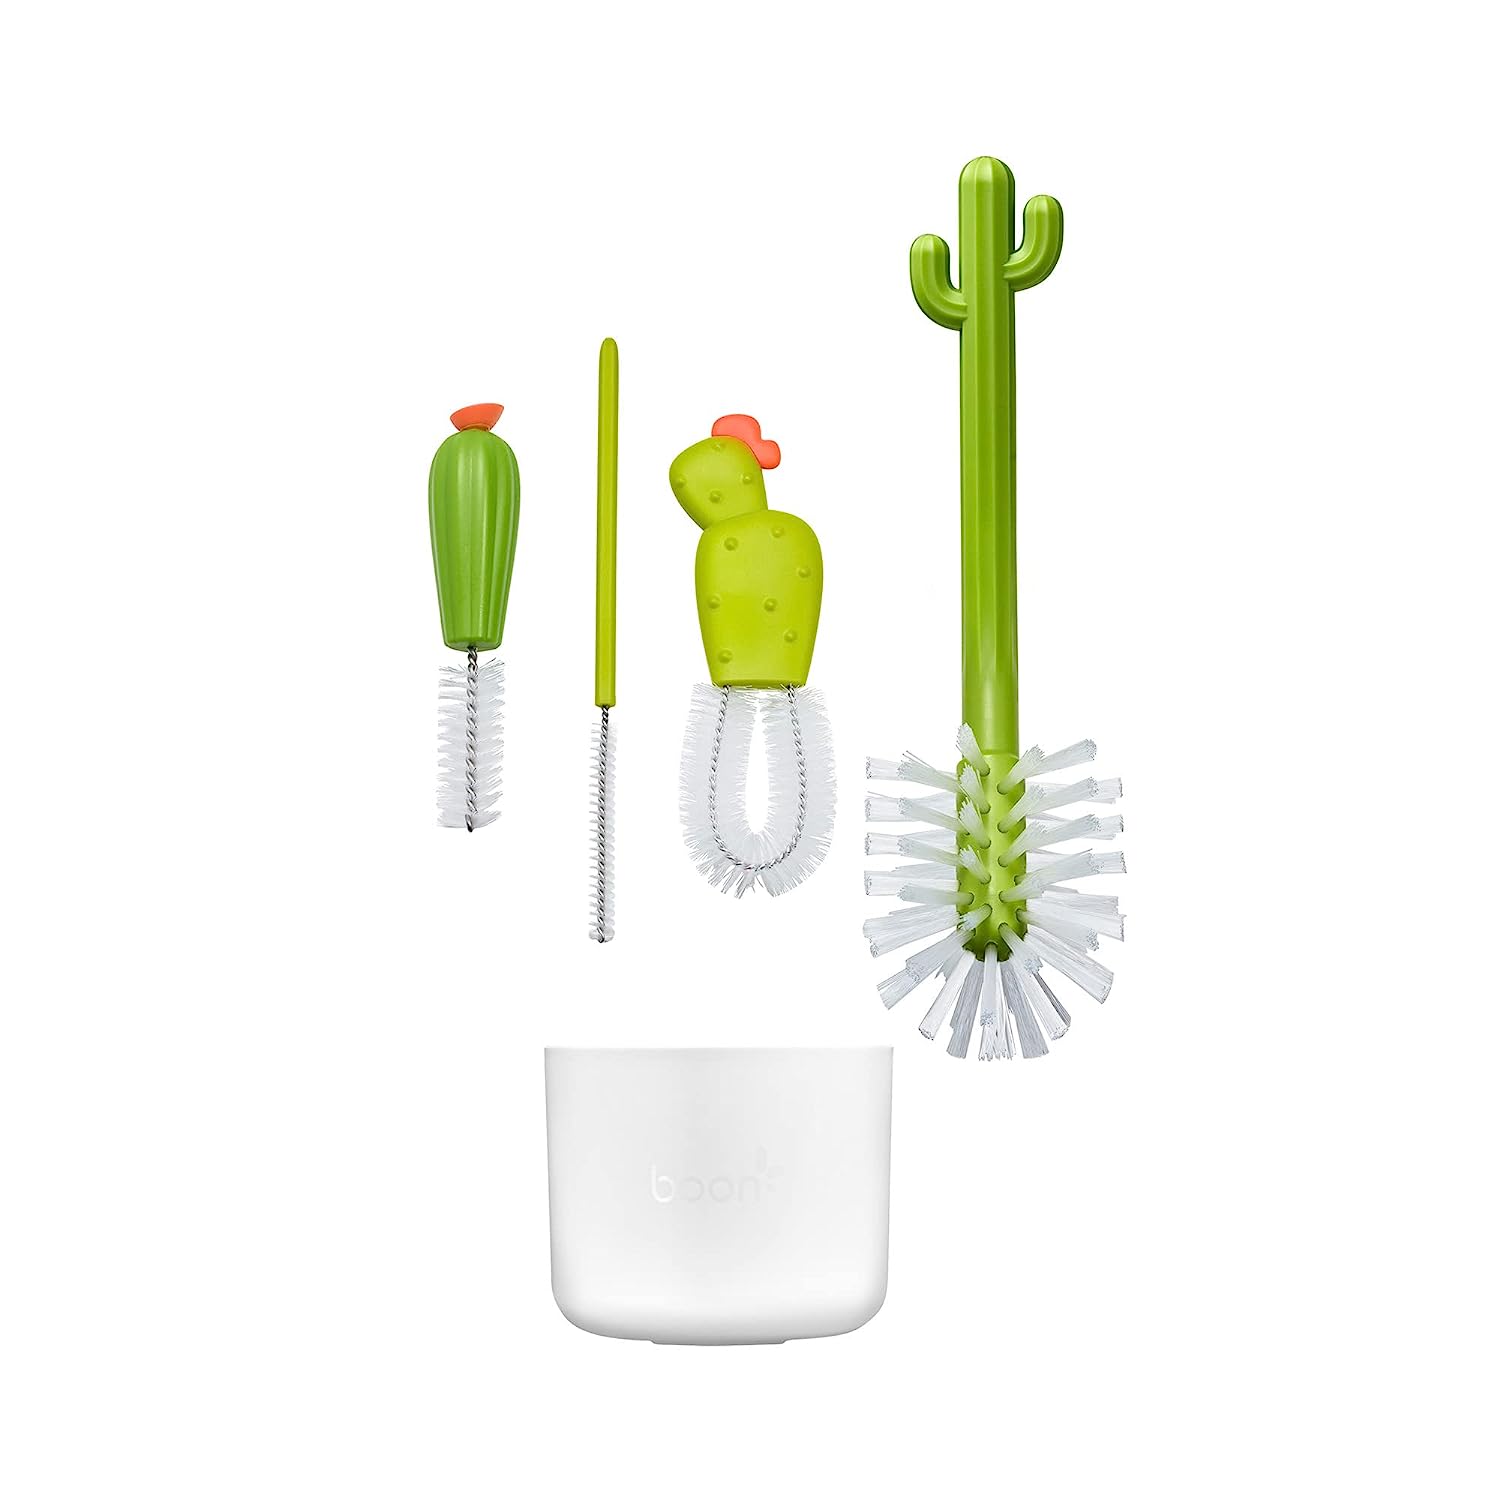 Boon’s Cacti Bottle Cleaning Brush Set